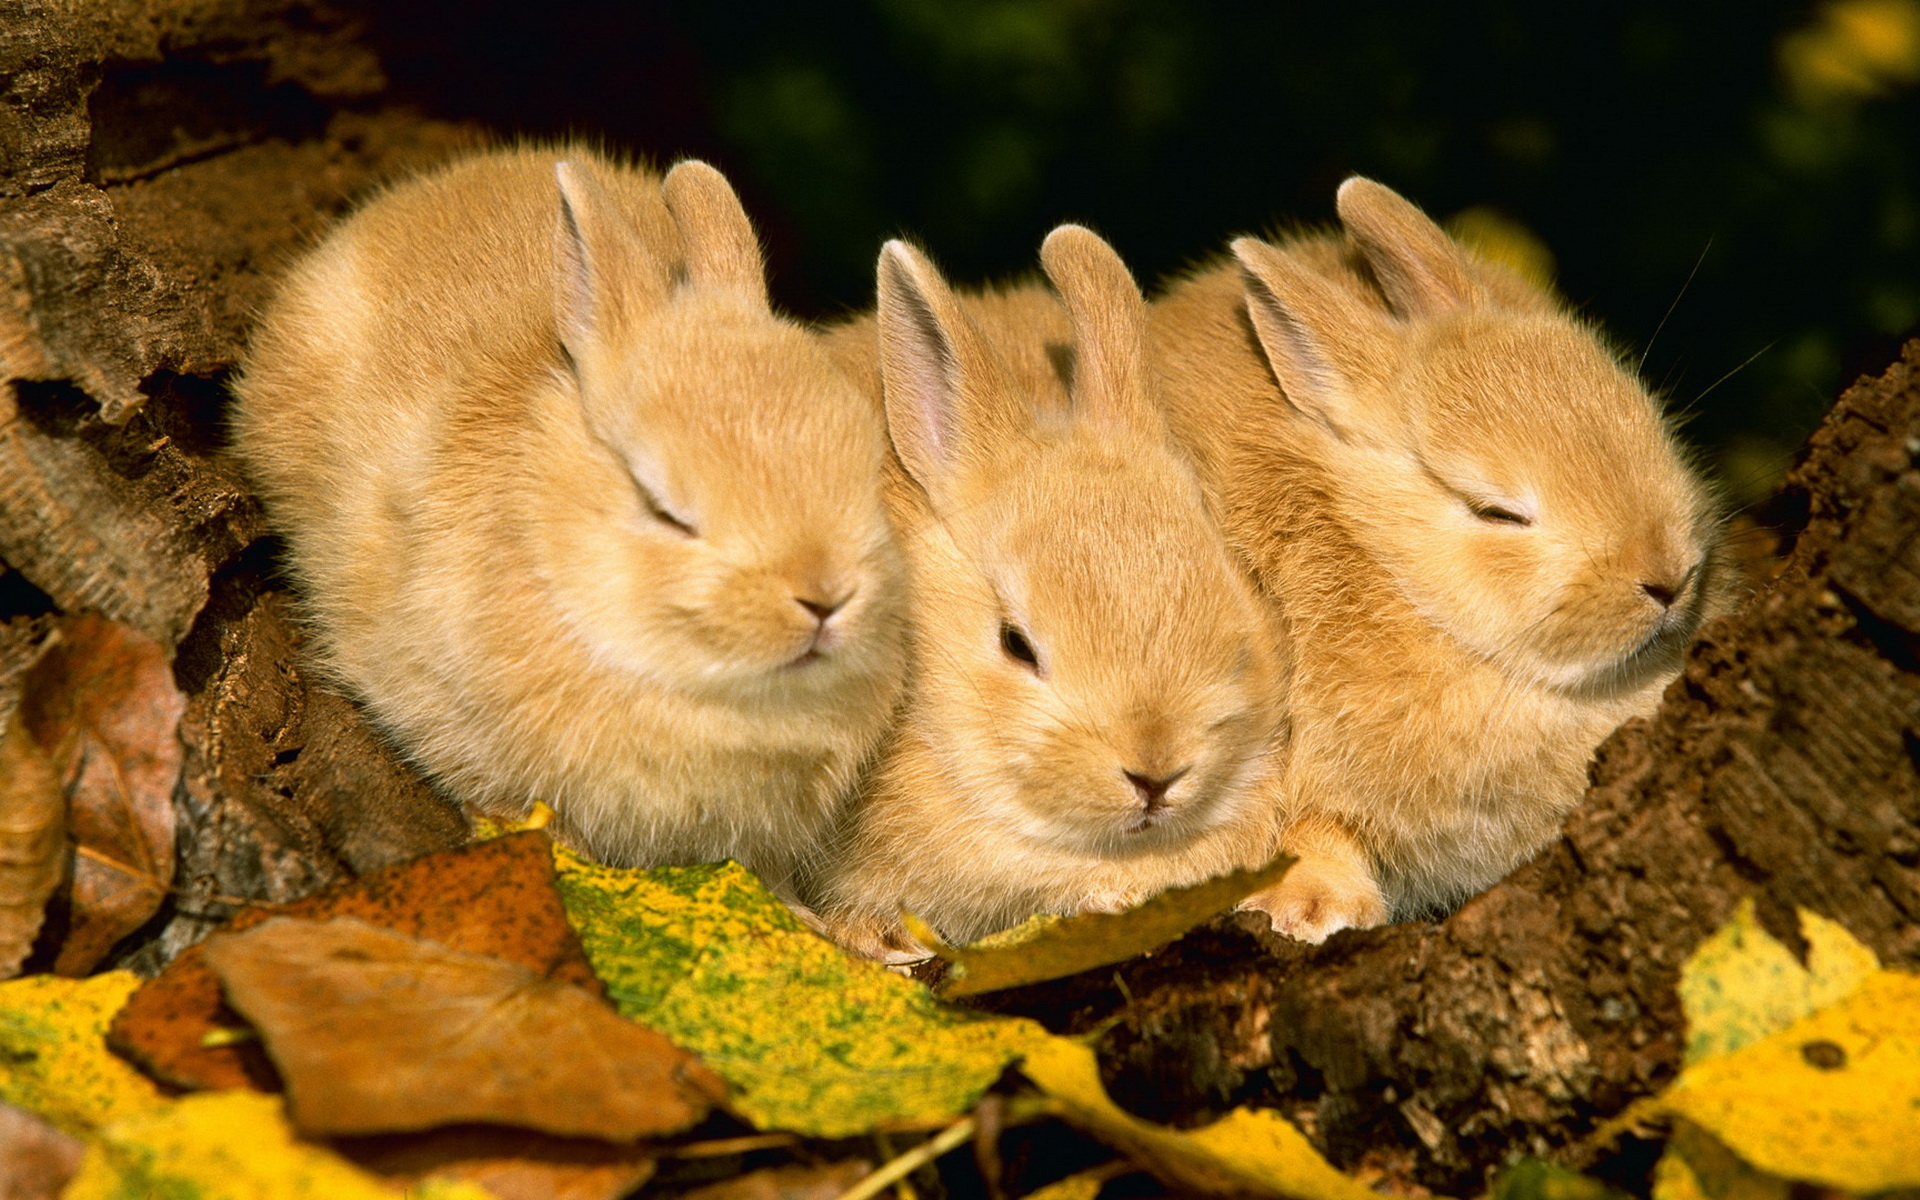 Animals images. Зайчата листопаднички. Осенние Зайчата листопаднички. Зайцы листопаднички. Природа и животные.